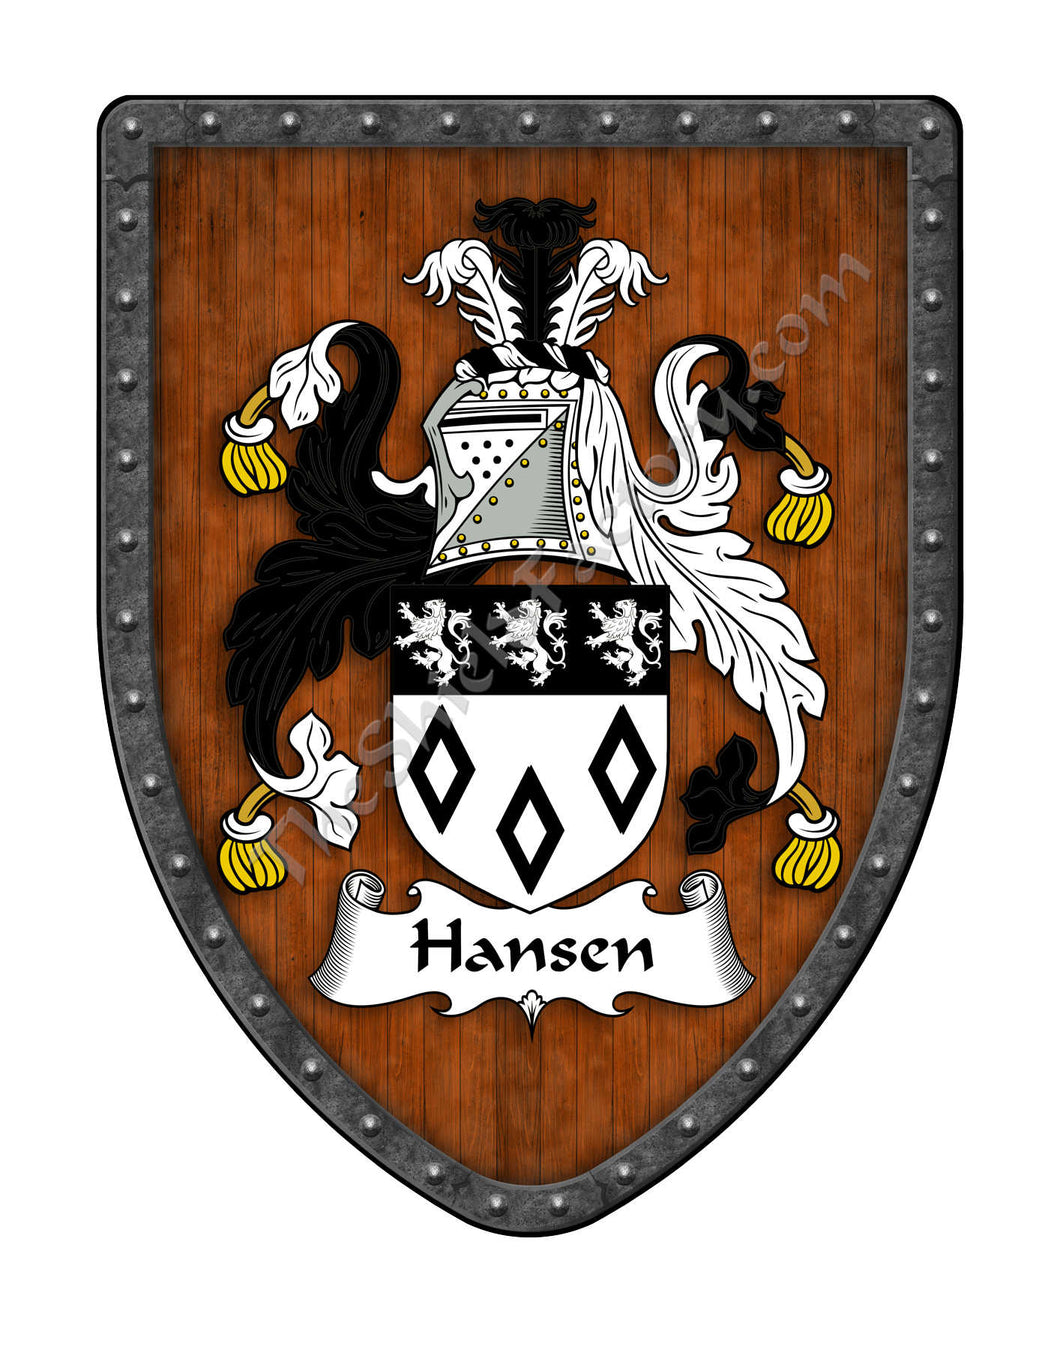 Hansen Coat of Arms Family Crest